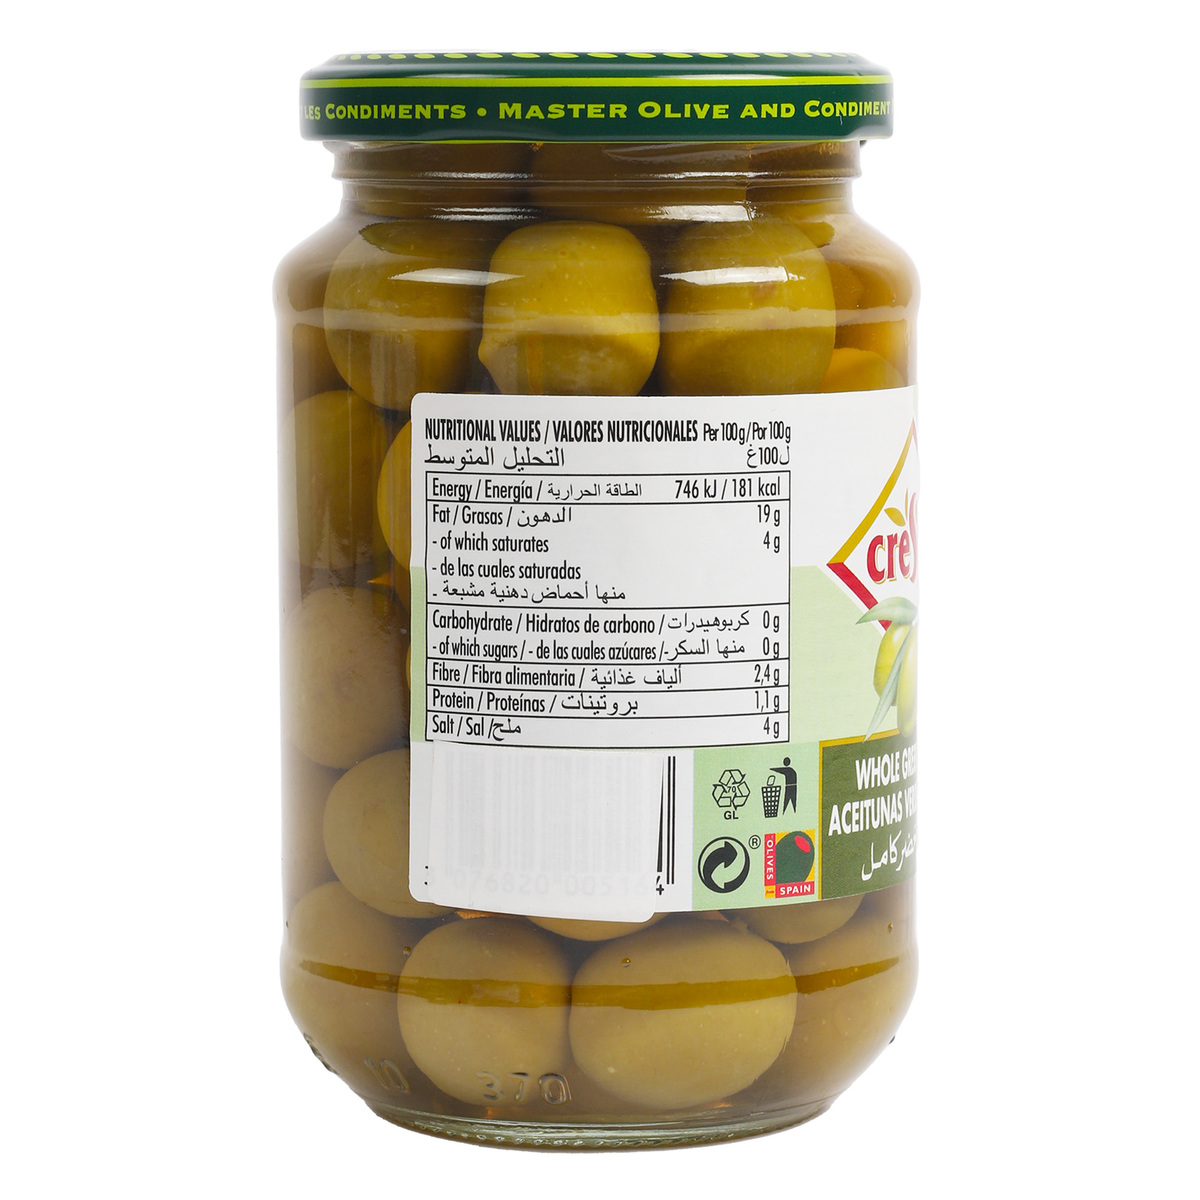 Crespo Green Olives 3 x 354 g